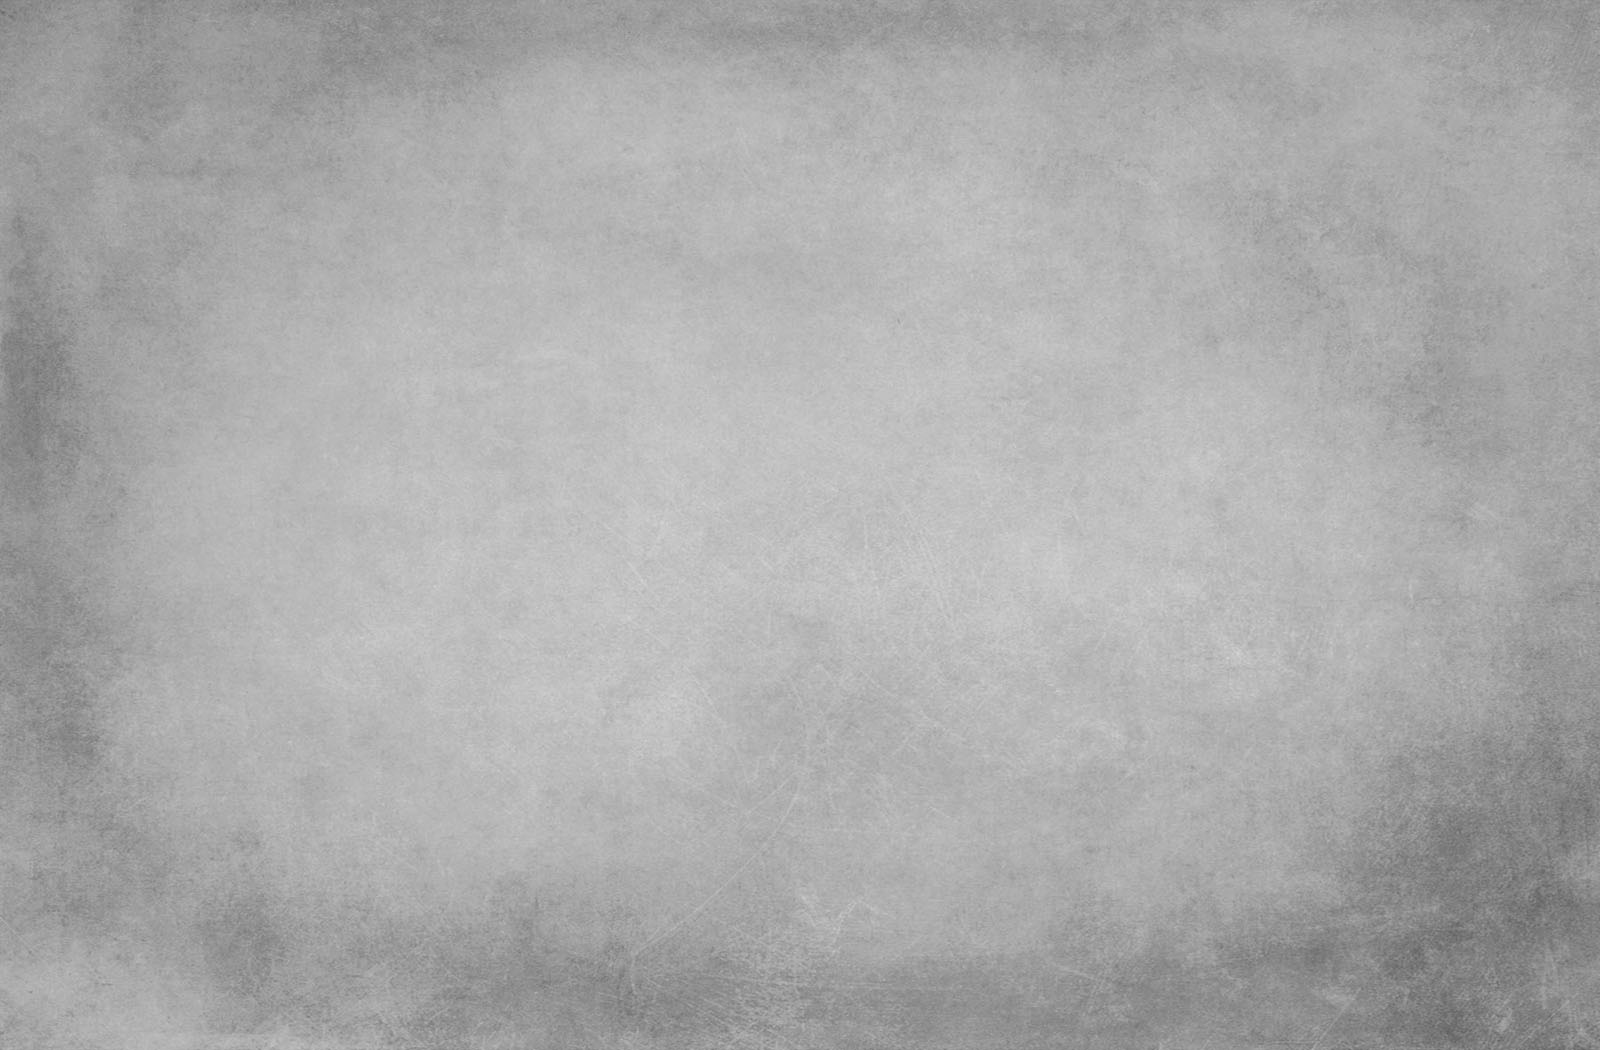 free backgrounds tumblr Wallpaper  WallpaperSafari Background  Grey Light